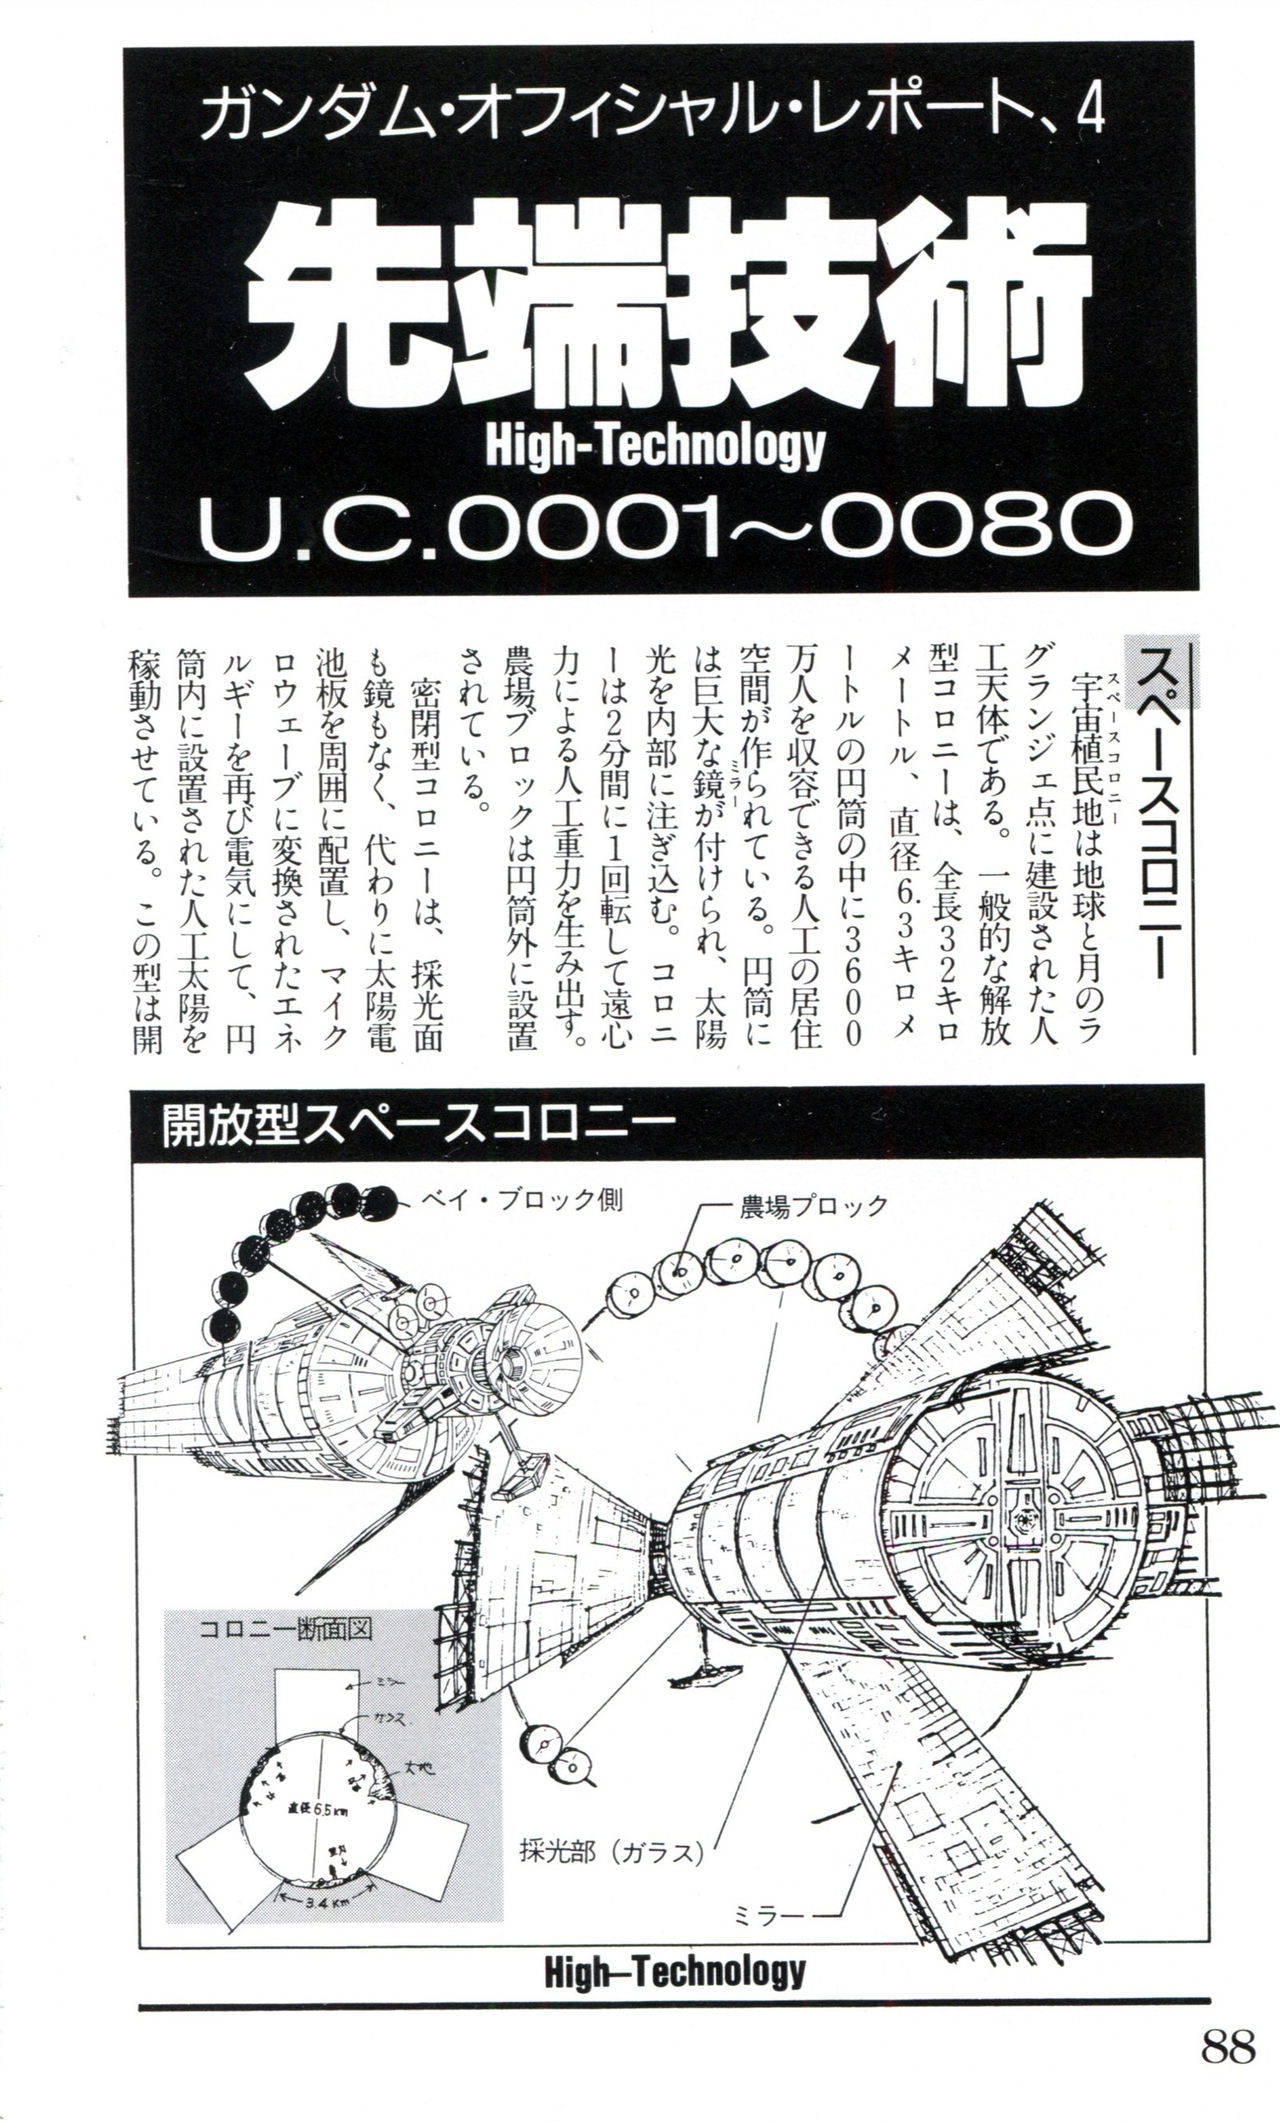 Mobile Suit Gundam U.C. Box MS Gundam Encyclopedia NO.01 - Mobile Suit Gundam 87